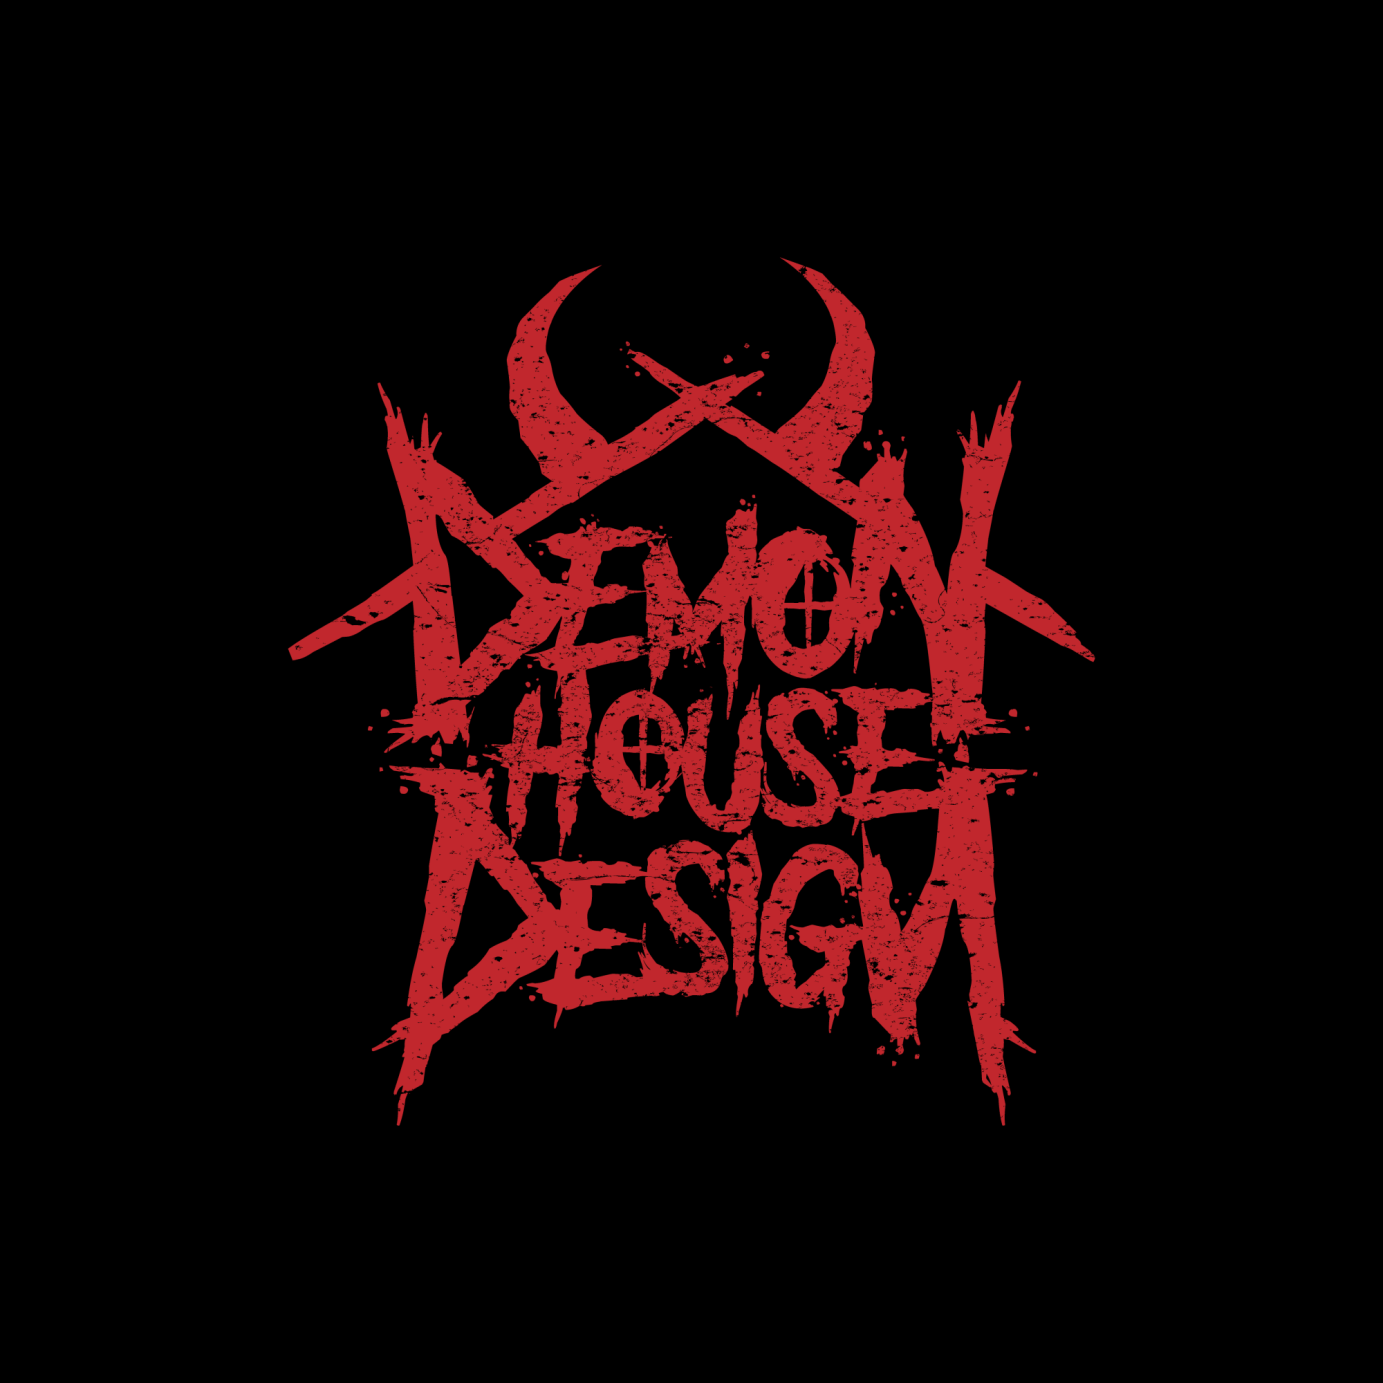 Demon House Design